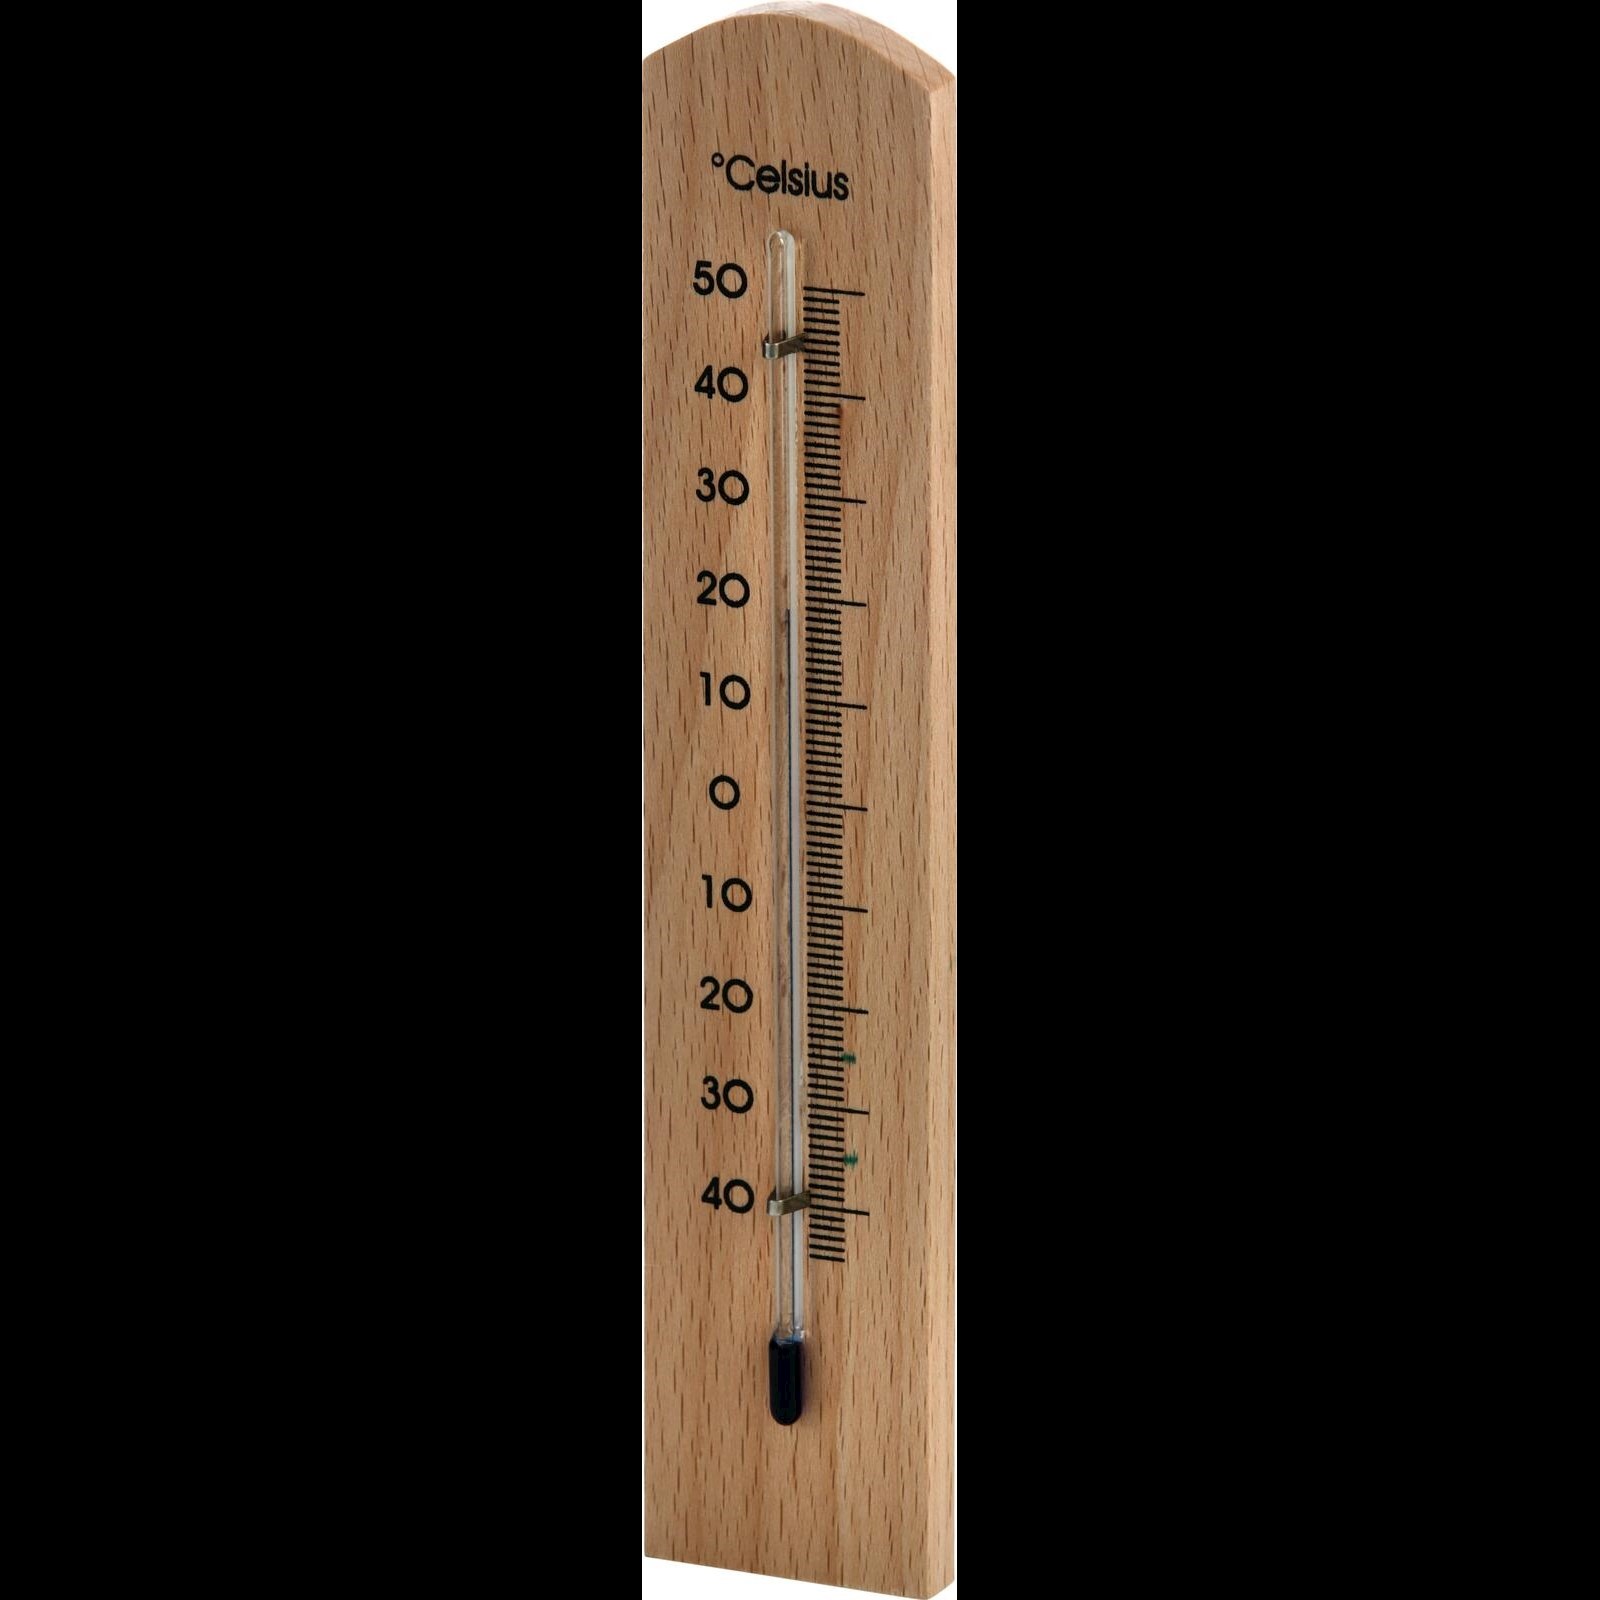 Hygromètre Prima Vista Acheter - Thermomètres - LANDI